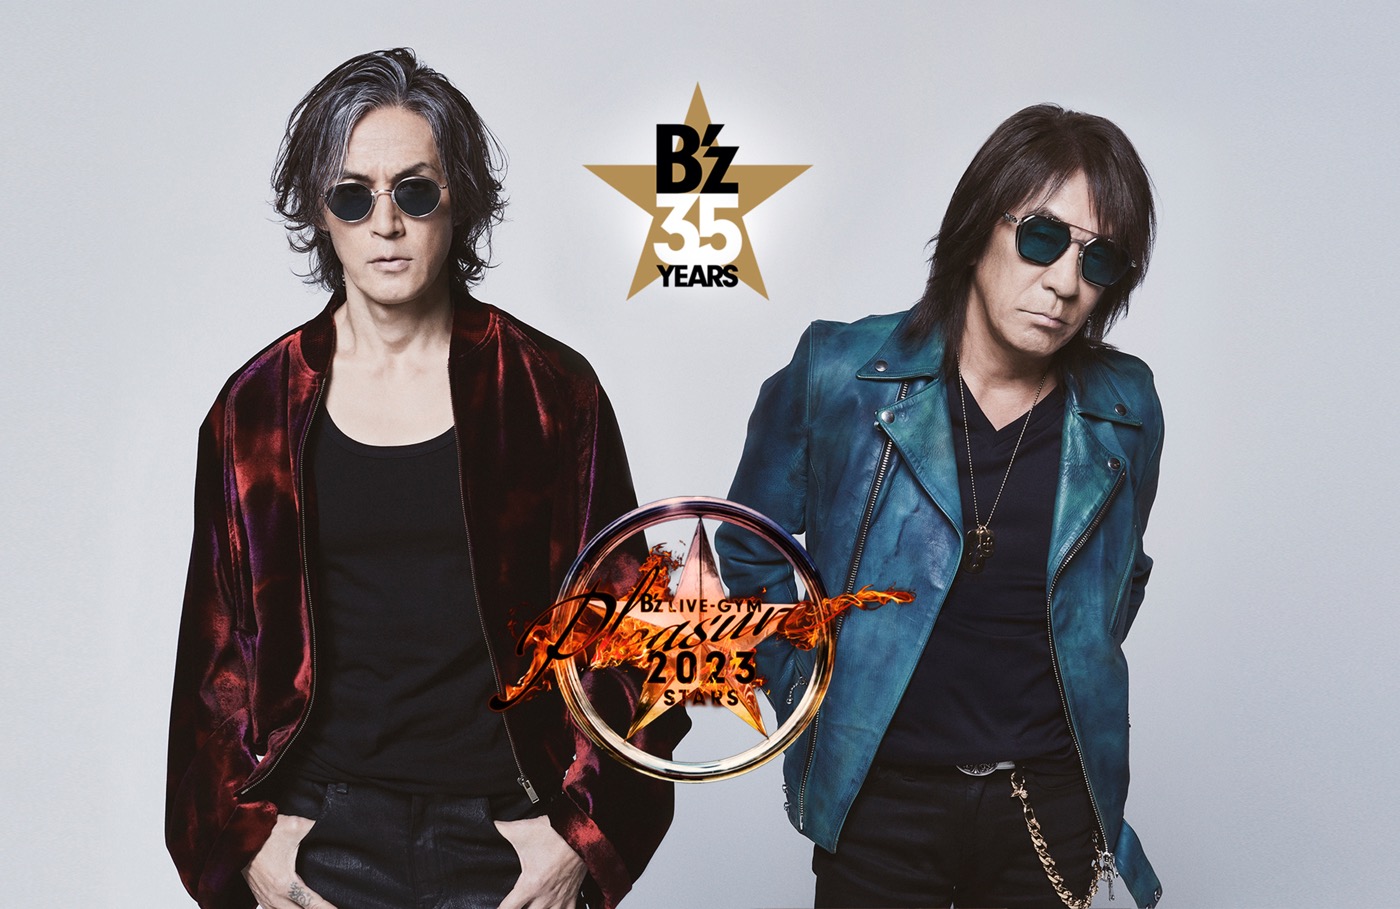 B'zのデビュー35周年とハードロックカフェ日本上陸40周年を祝う注目 ...